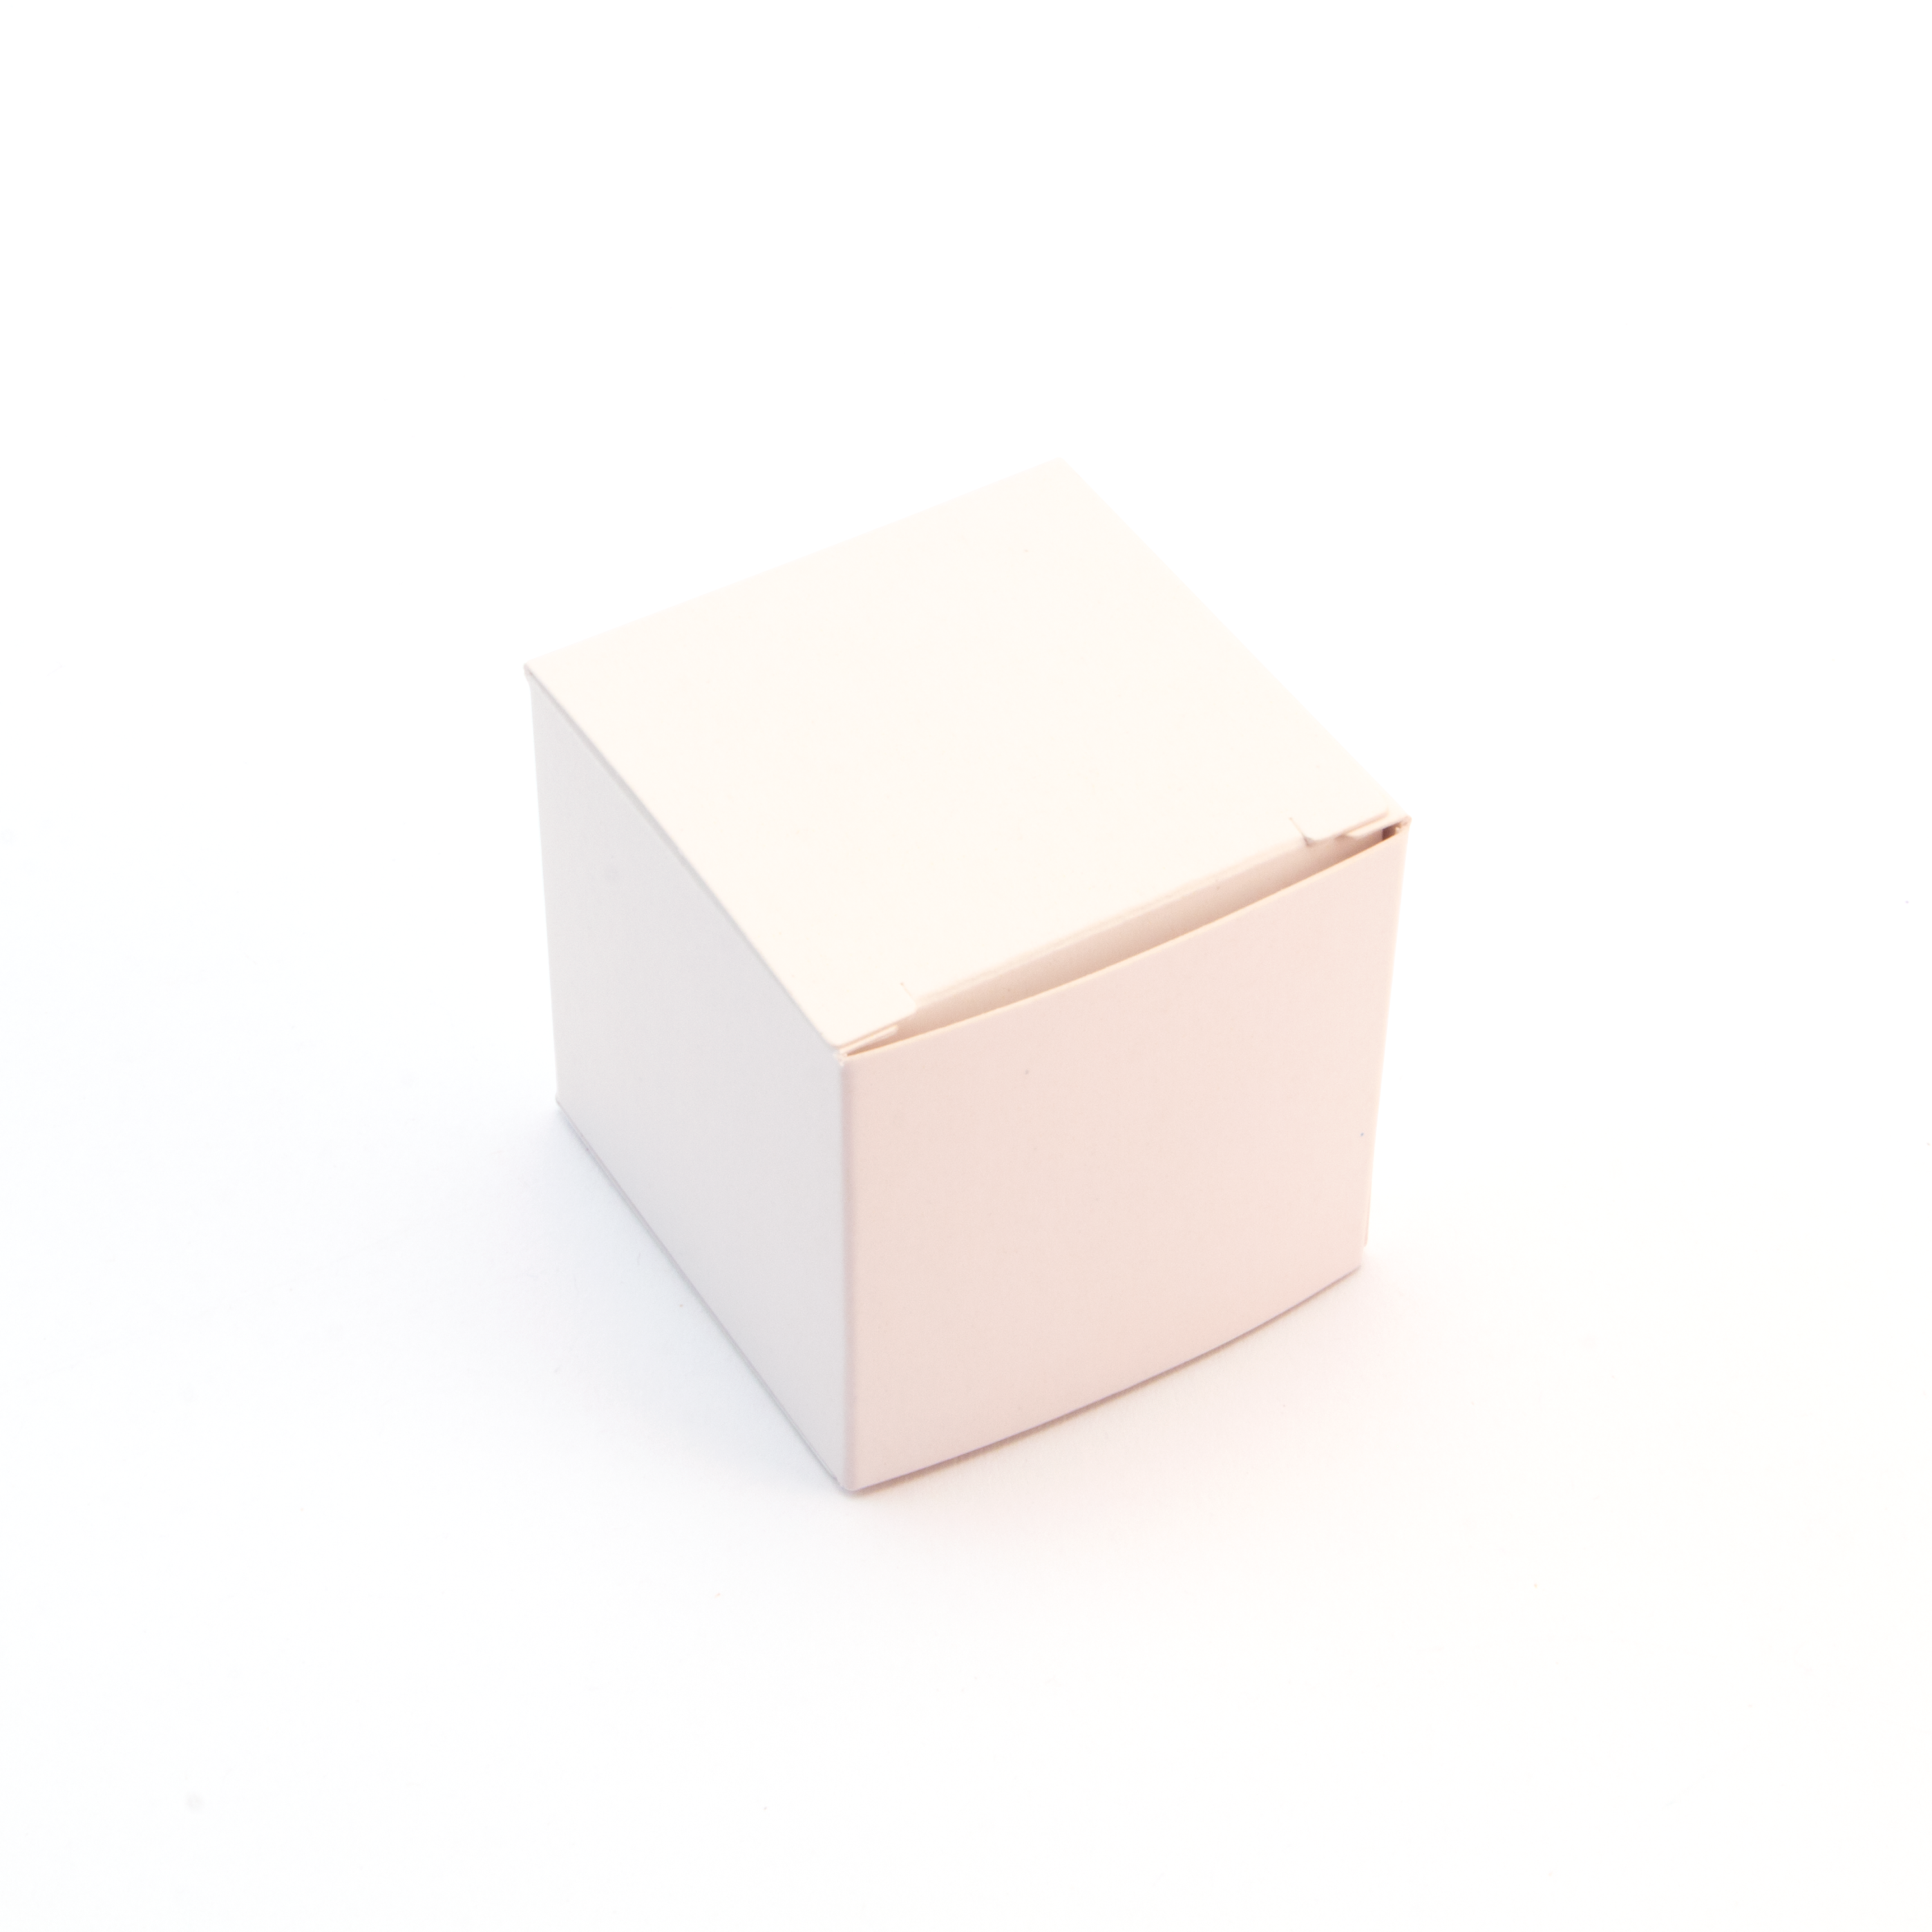 Easter – Eco Maxi Cube - Cream 'n Crunch Eggs